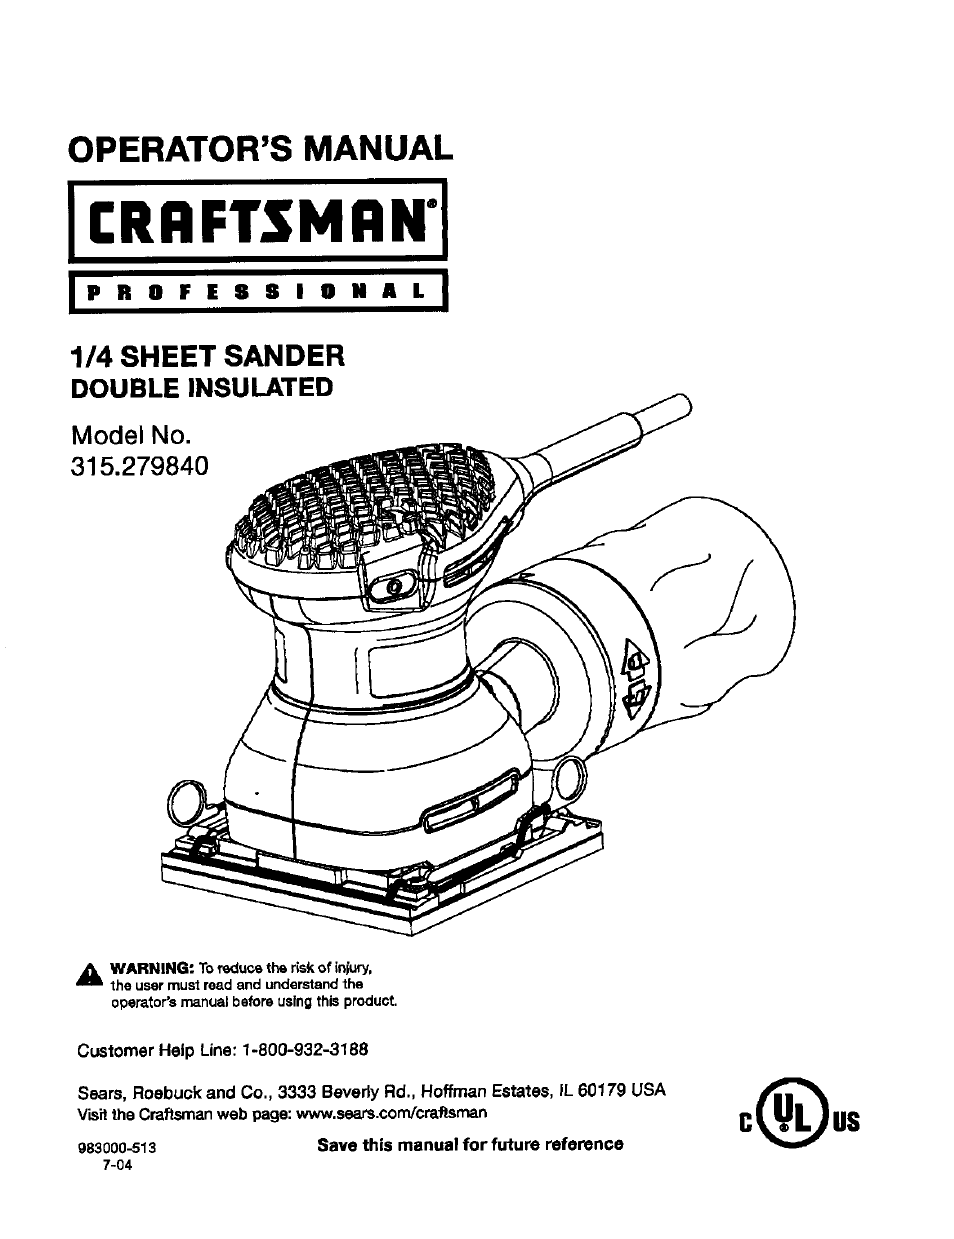 Craftsman 315.279840 User Manual | 16 pages